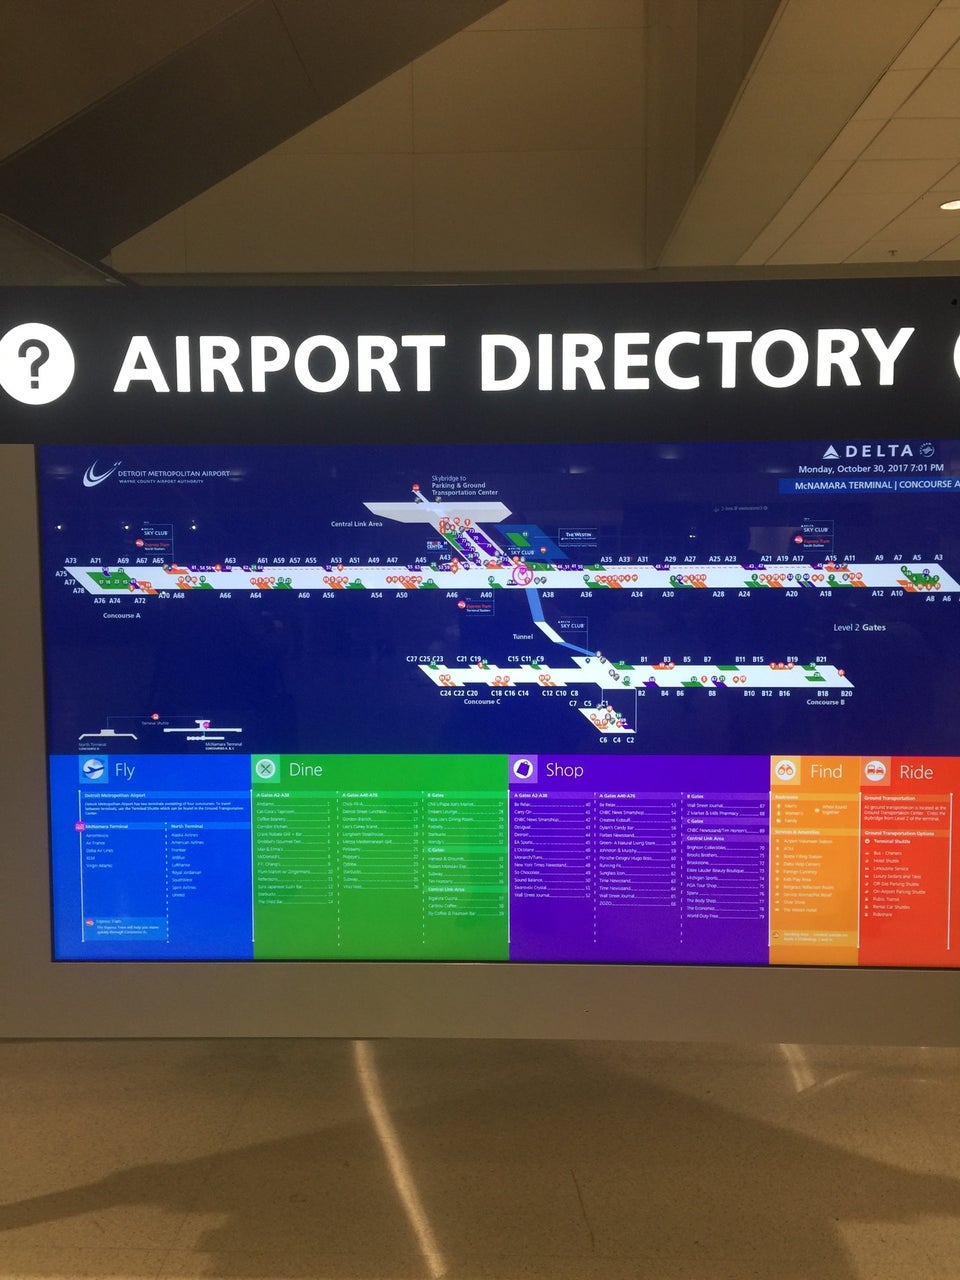 Photo of Detroit Metro Airport (DTW)